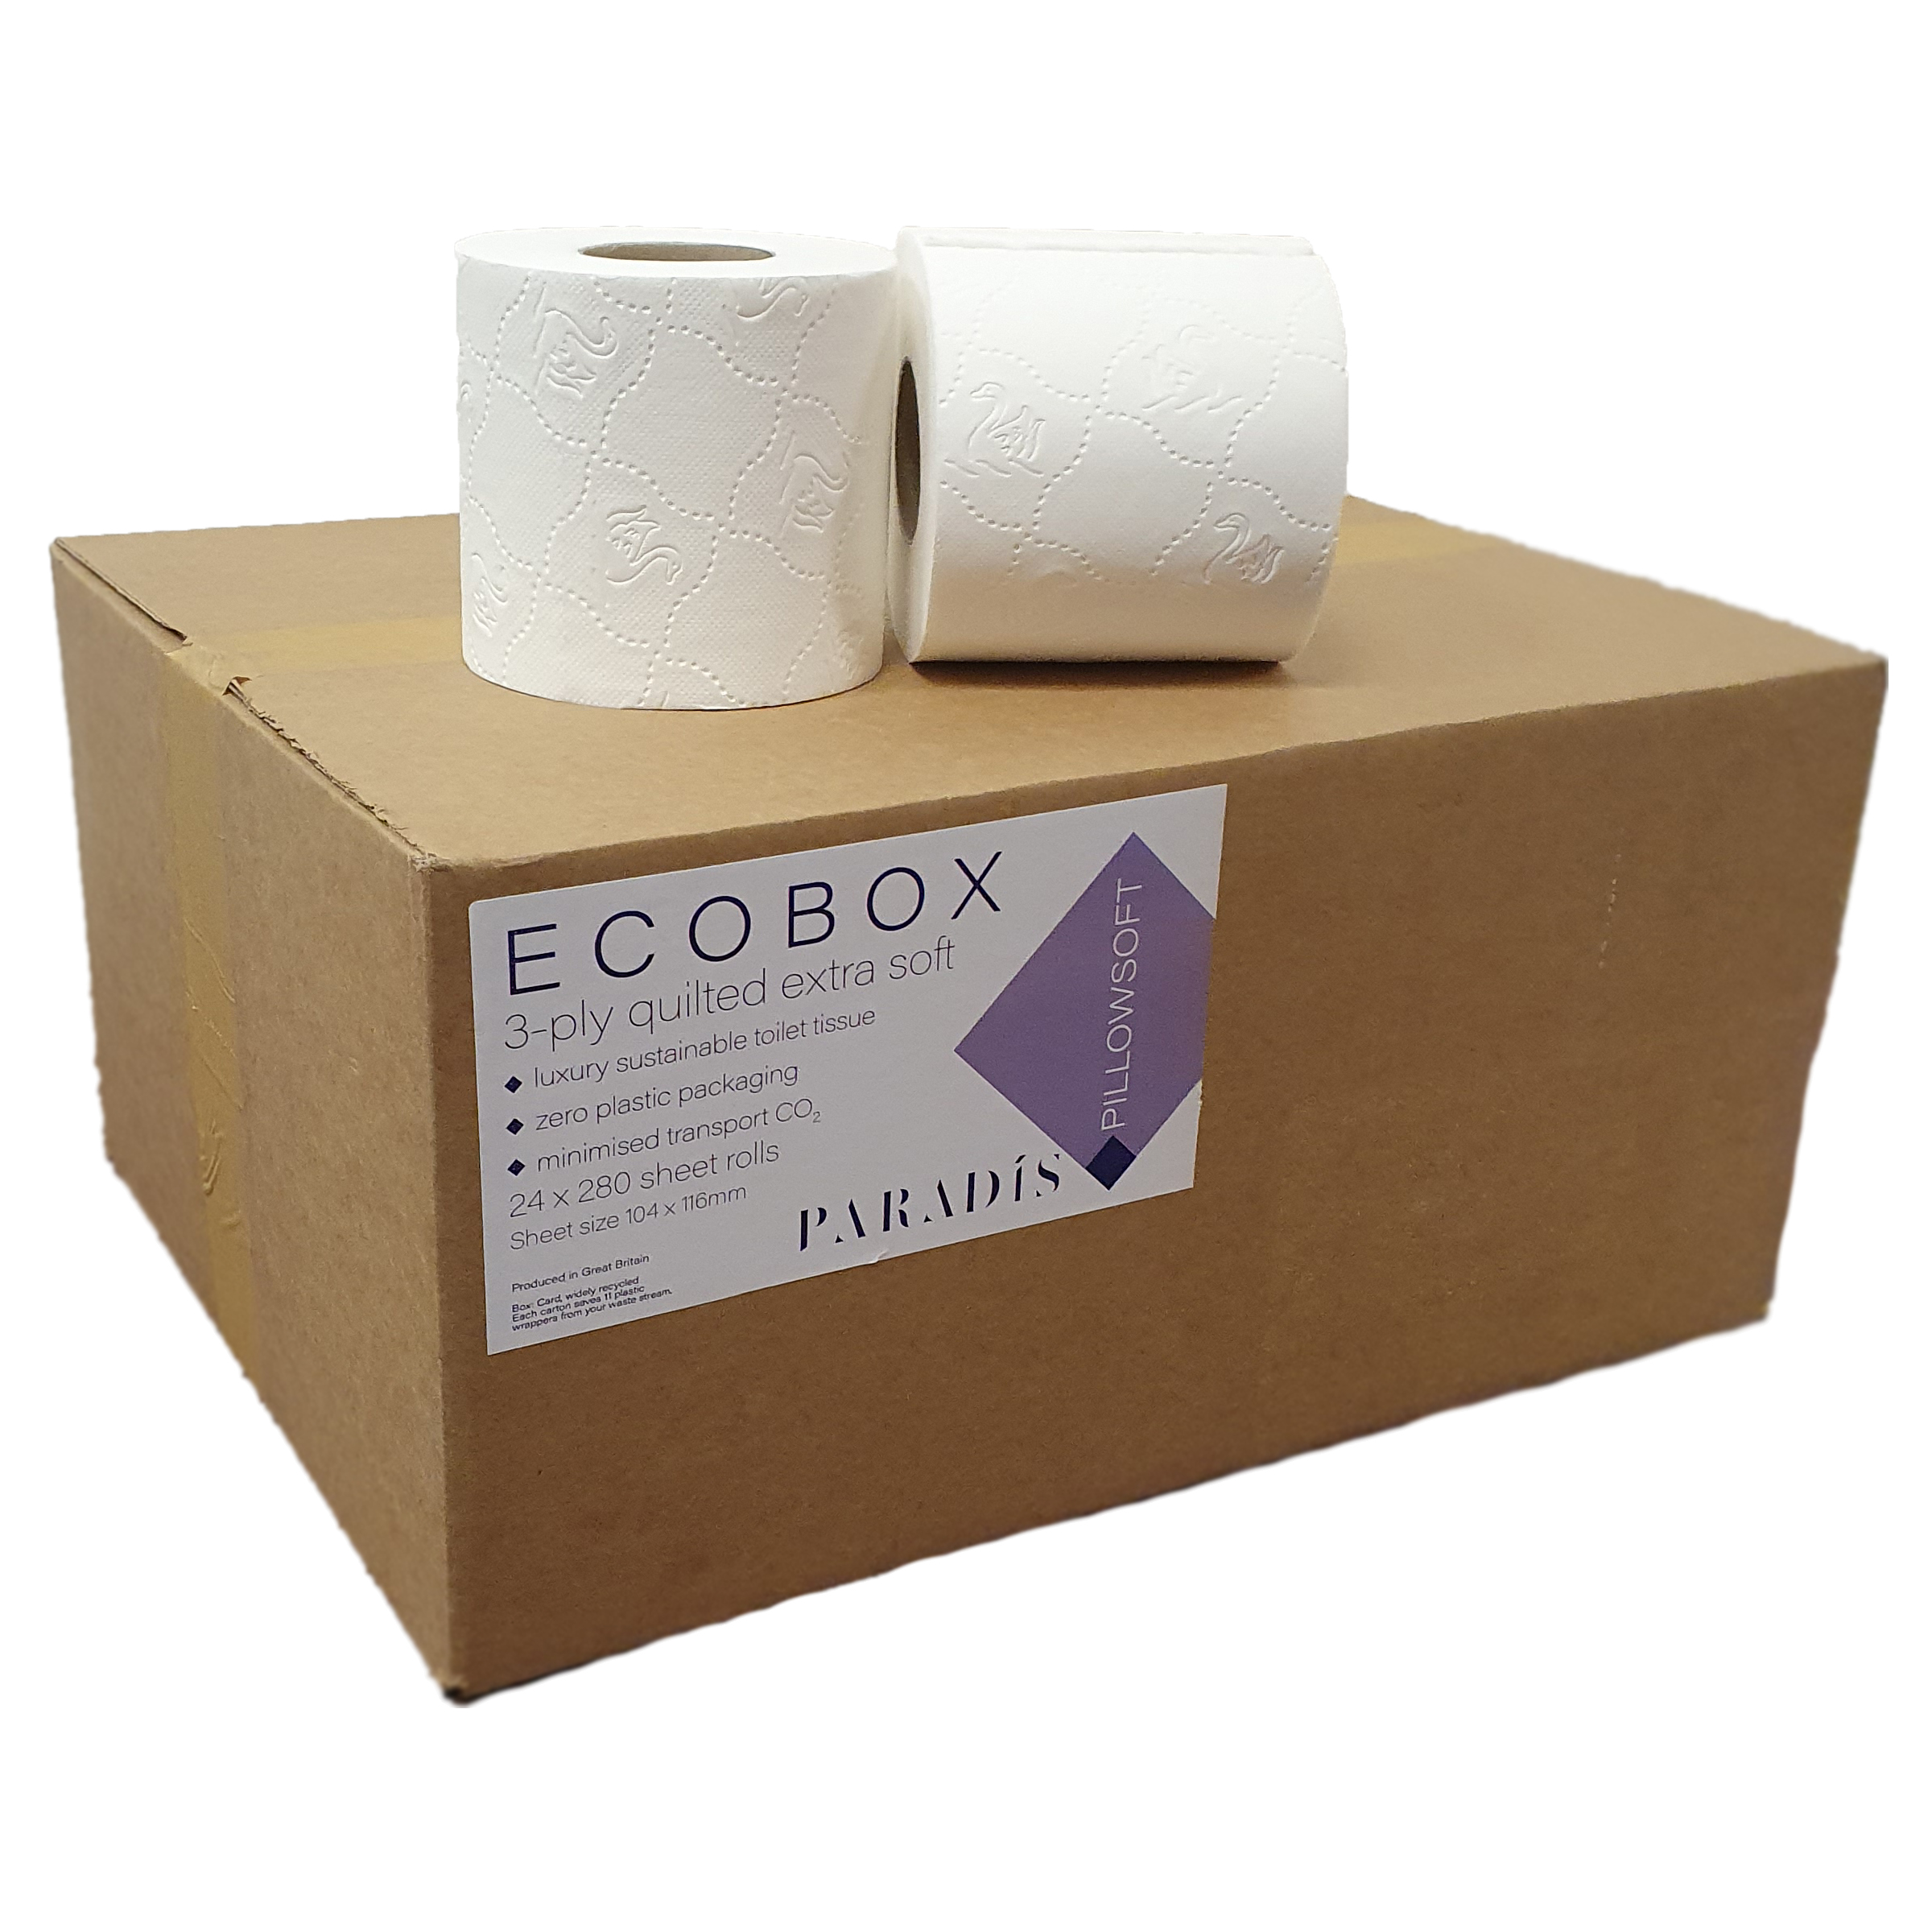 Paradís Pillowsoft - Ecobox toilet paper